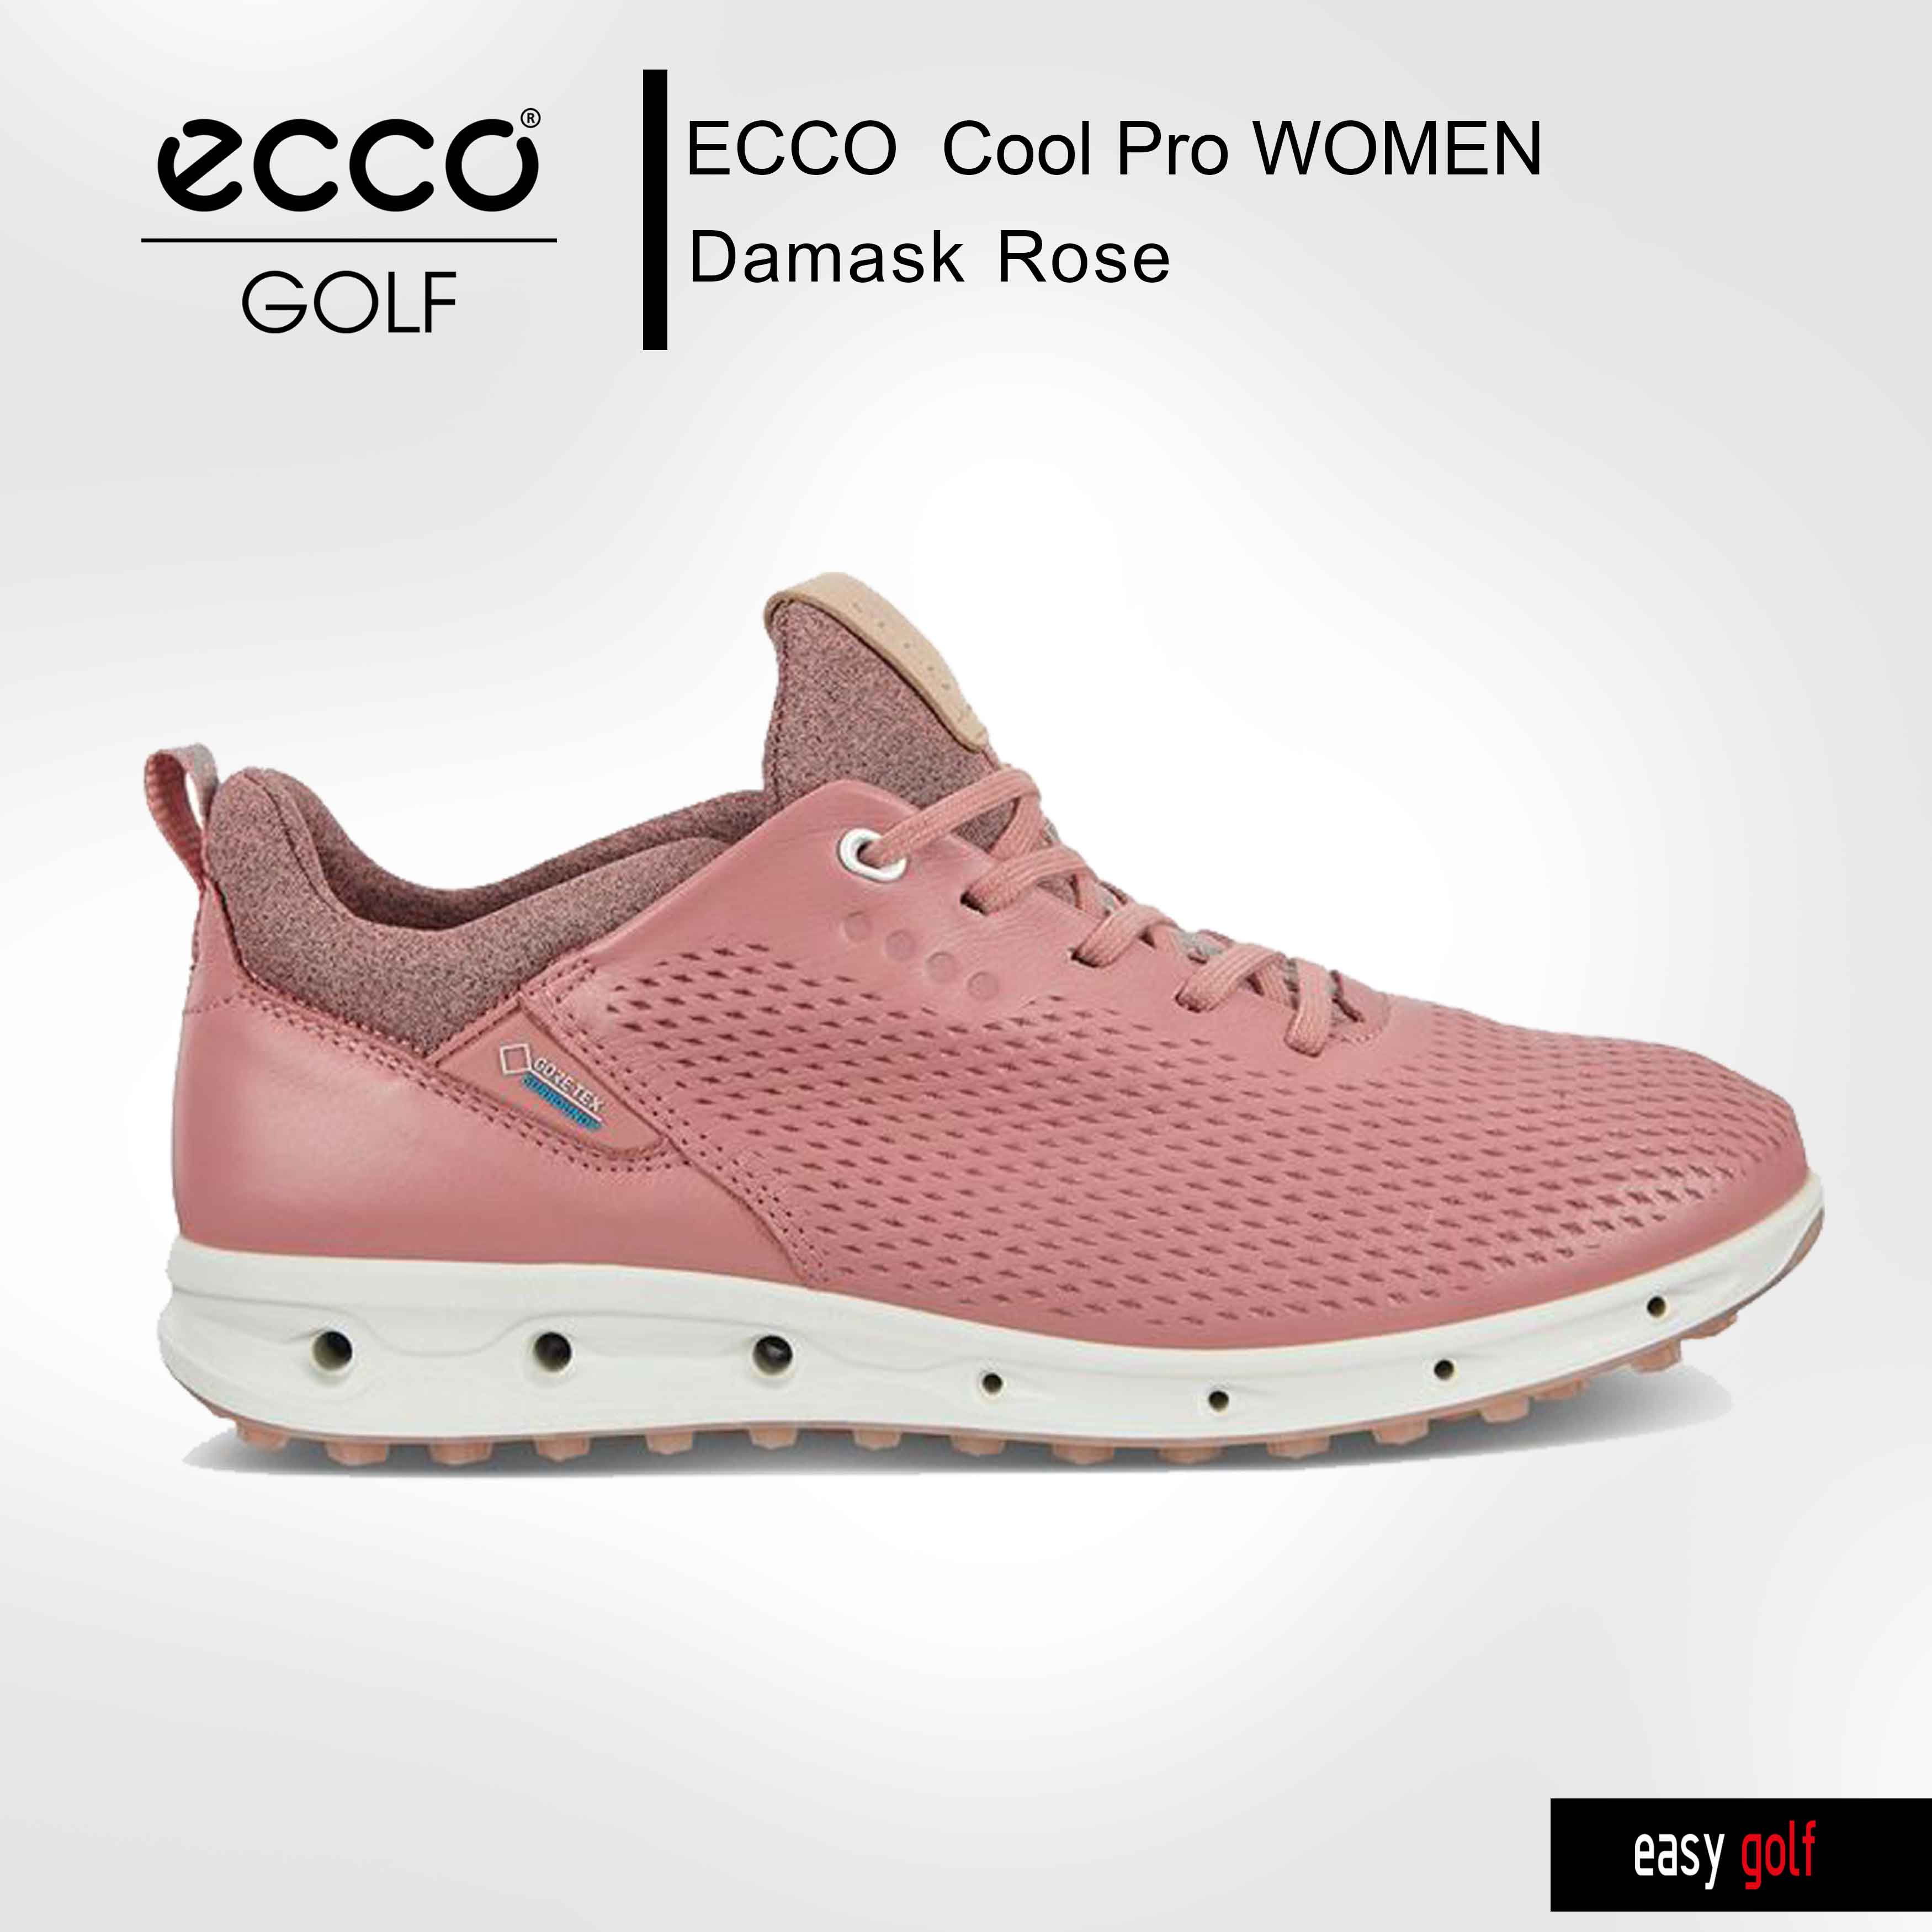 ECCO GOLF รองเท้ากอล์ฟผู้หญิง รองเท้ากีฬาหญิง Golf Shoes รุ่น ECCO COOL PRO WOMEN สีชมพู (Damask Rose)